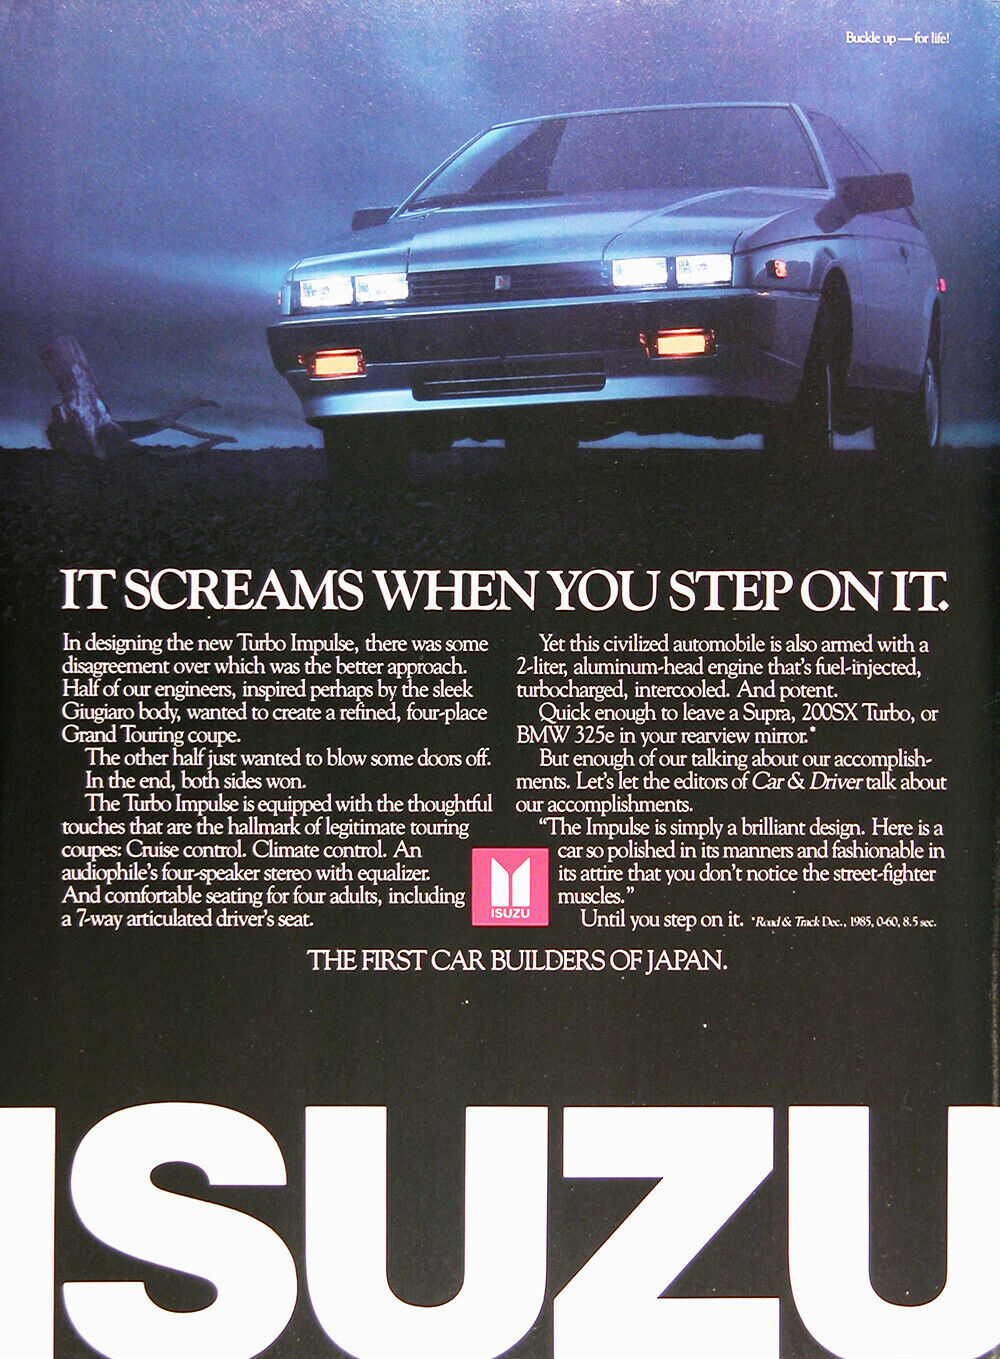 1986 Isuzu Impulse Turbo Genuine Vintage Ad ~ Giugiato Body ~ Free Shipping!